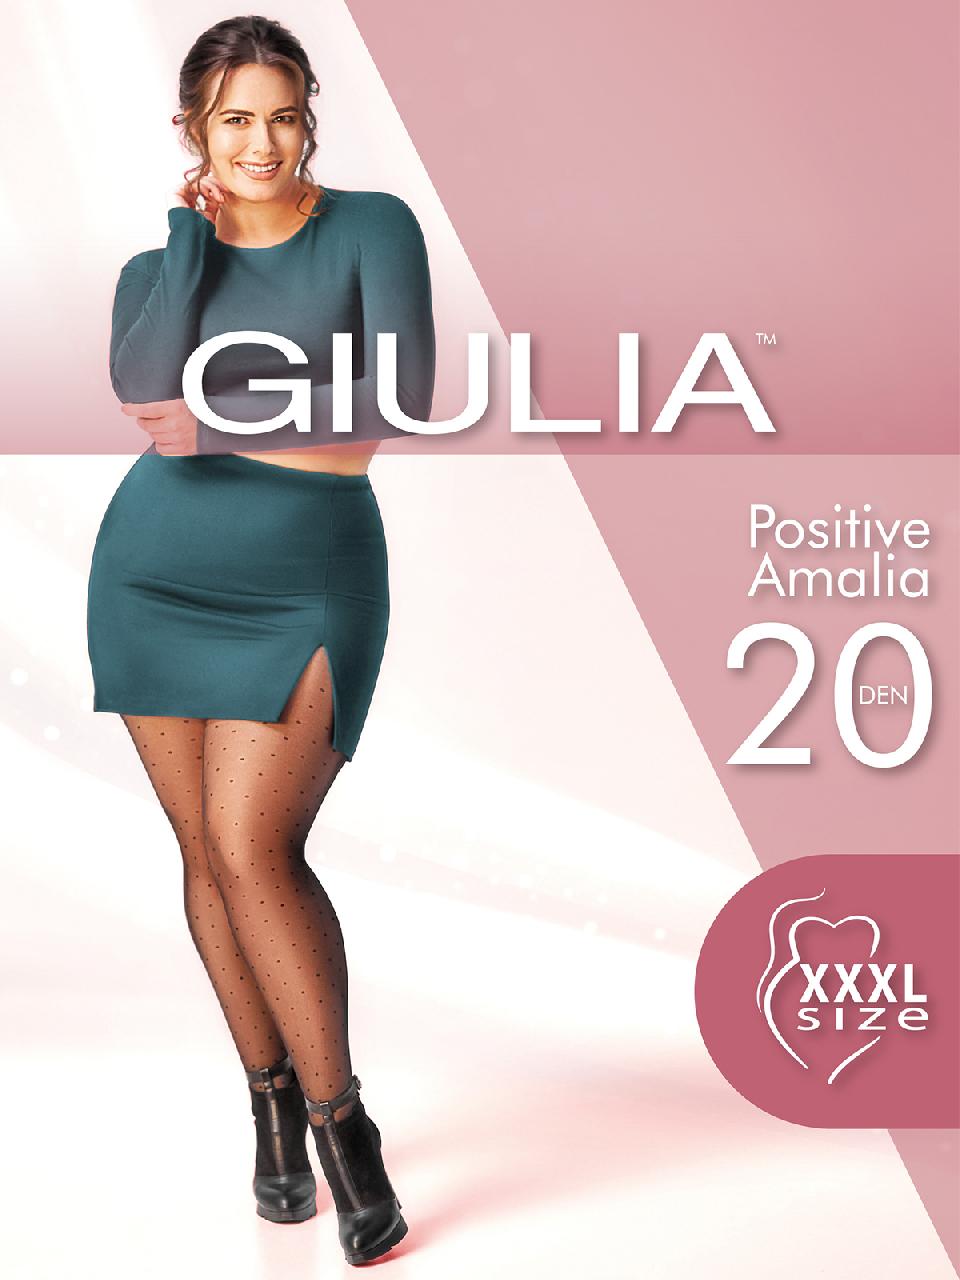 Giulia Positive Amalia 01 nero 6/XXL